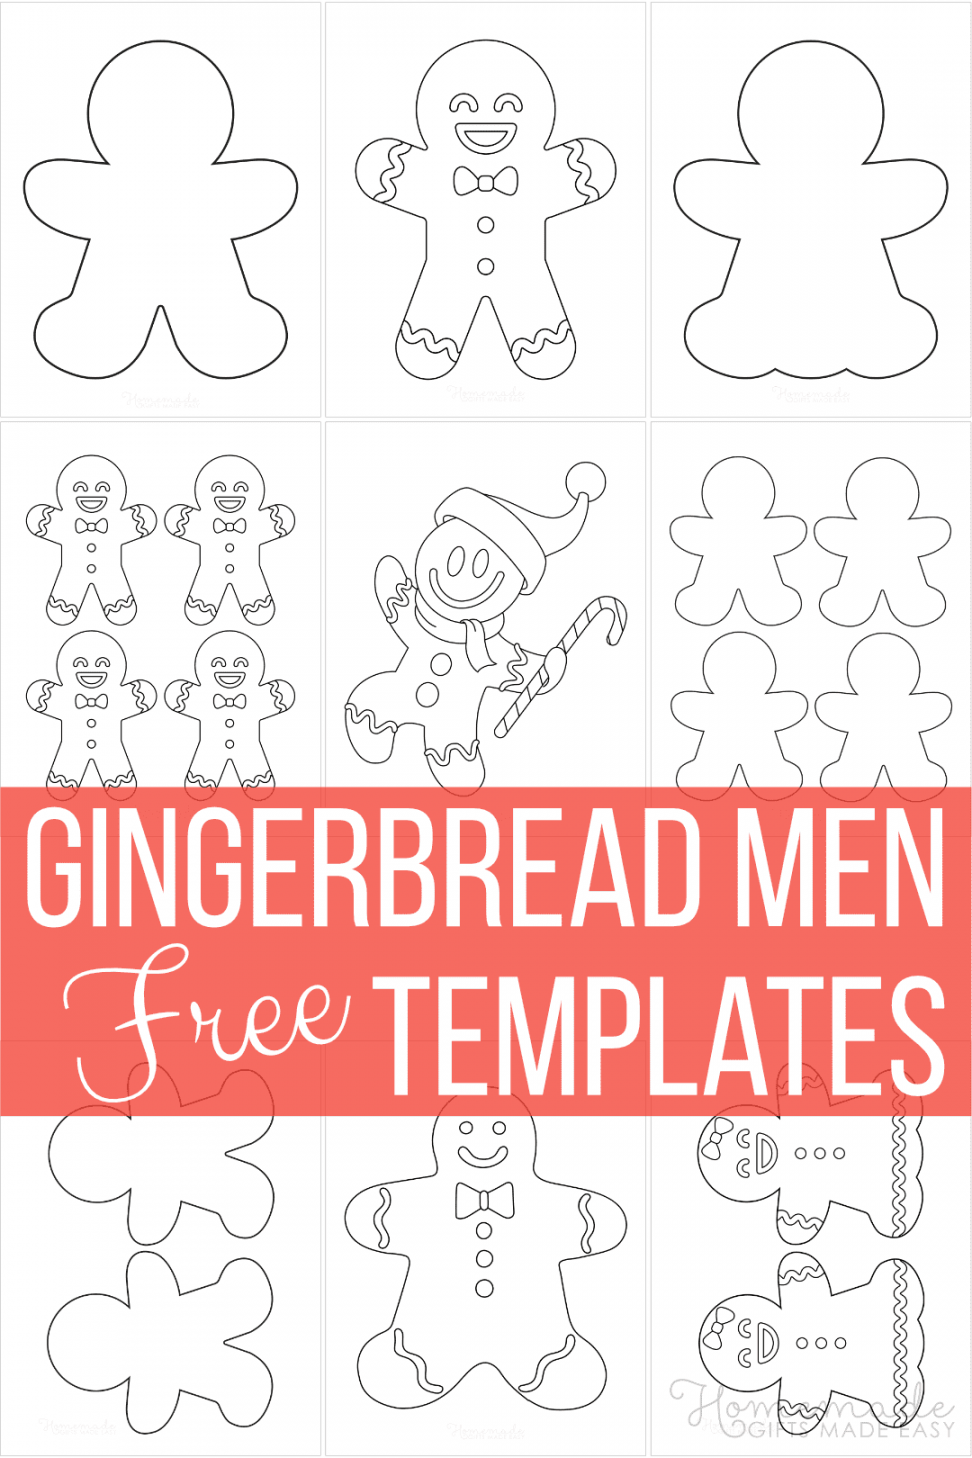 Free Printable Gingerbread Man Templates & Coloring Pages - FREE Printables - Printable Gingerbread Man Craft